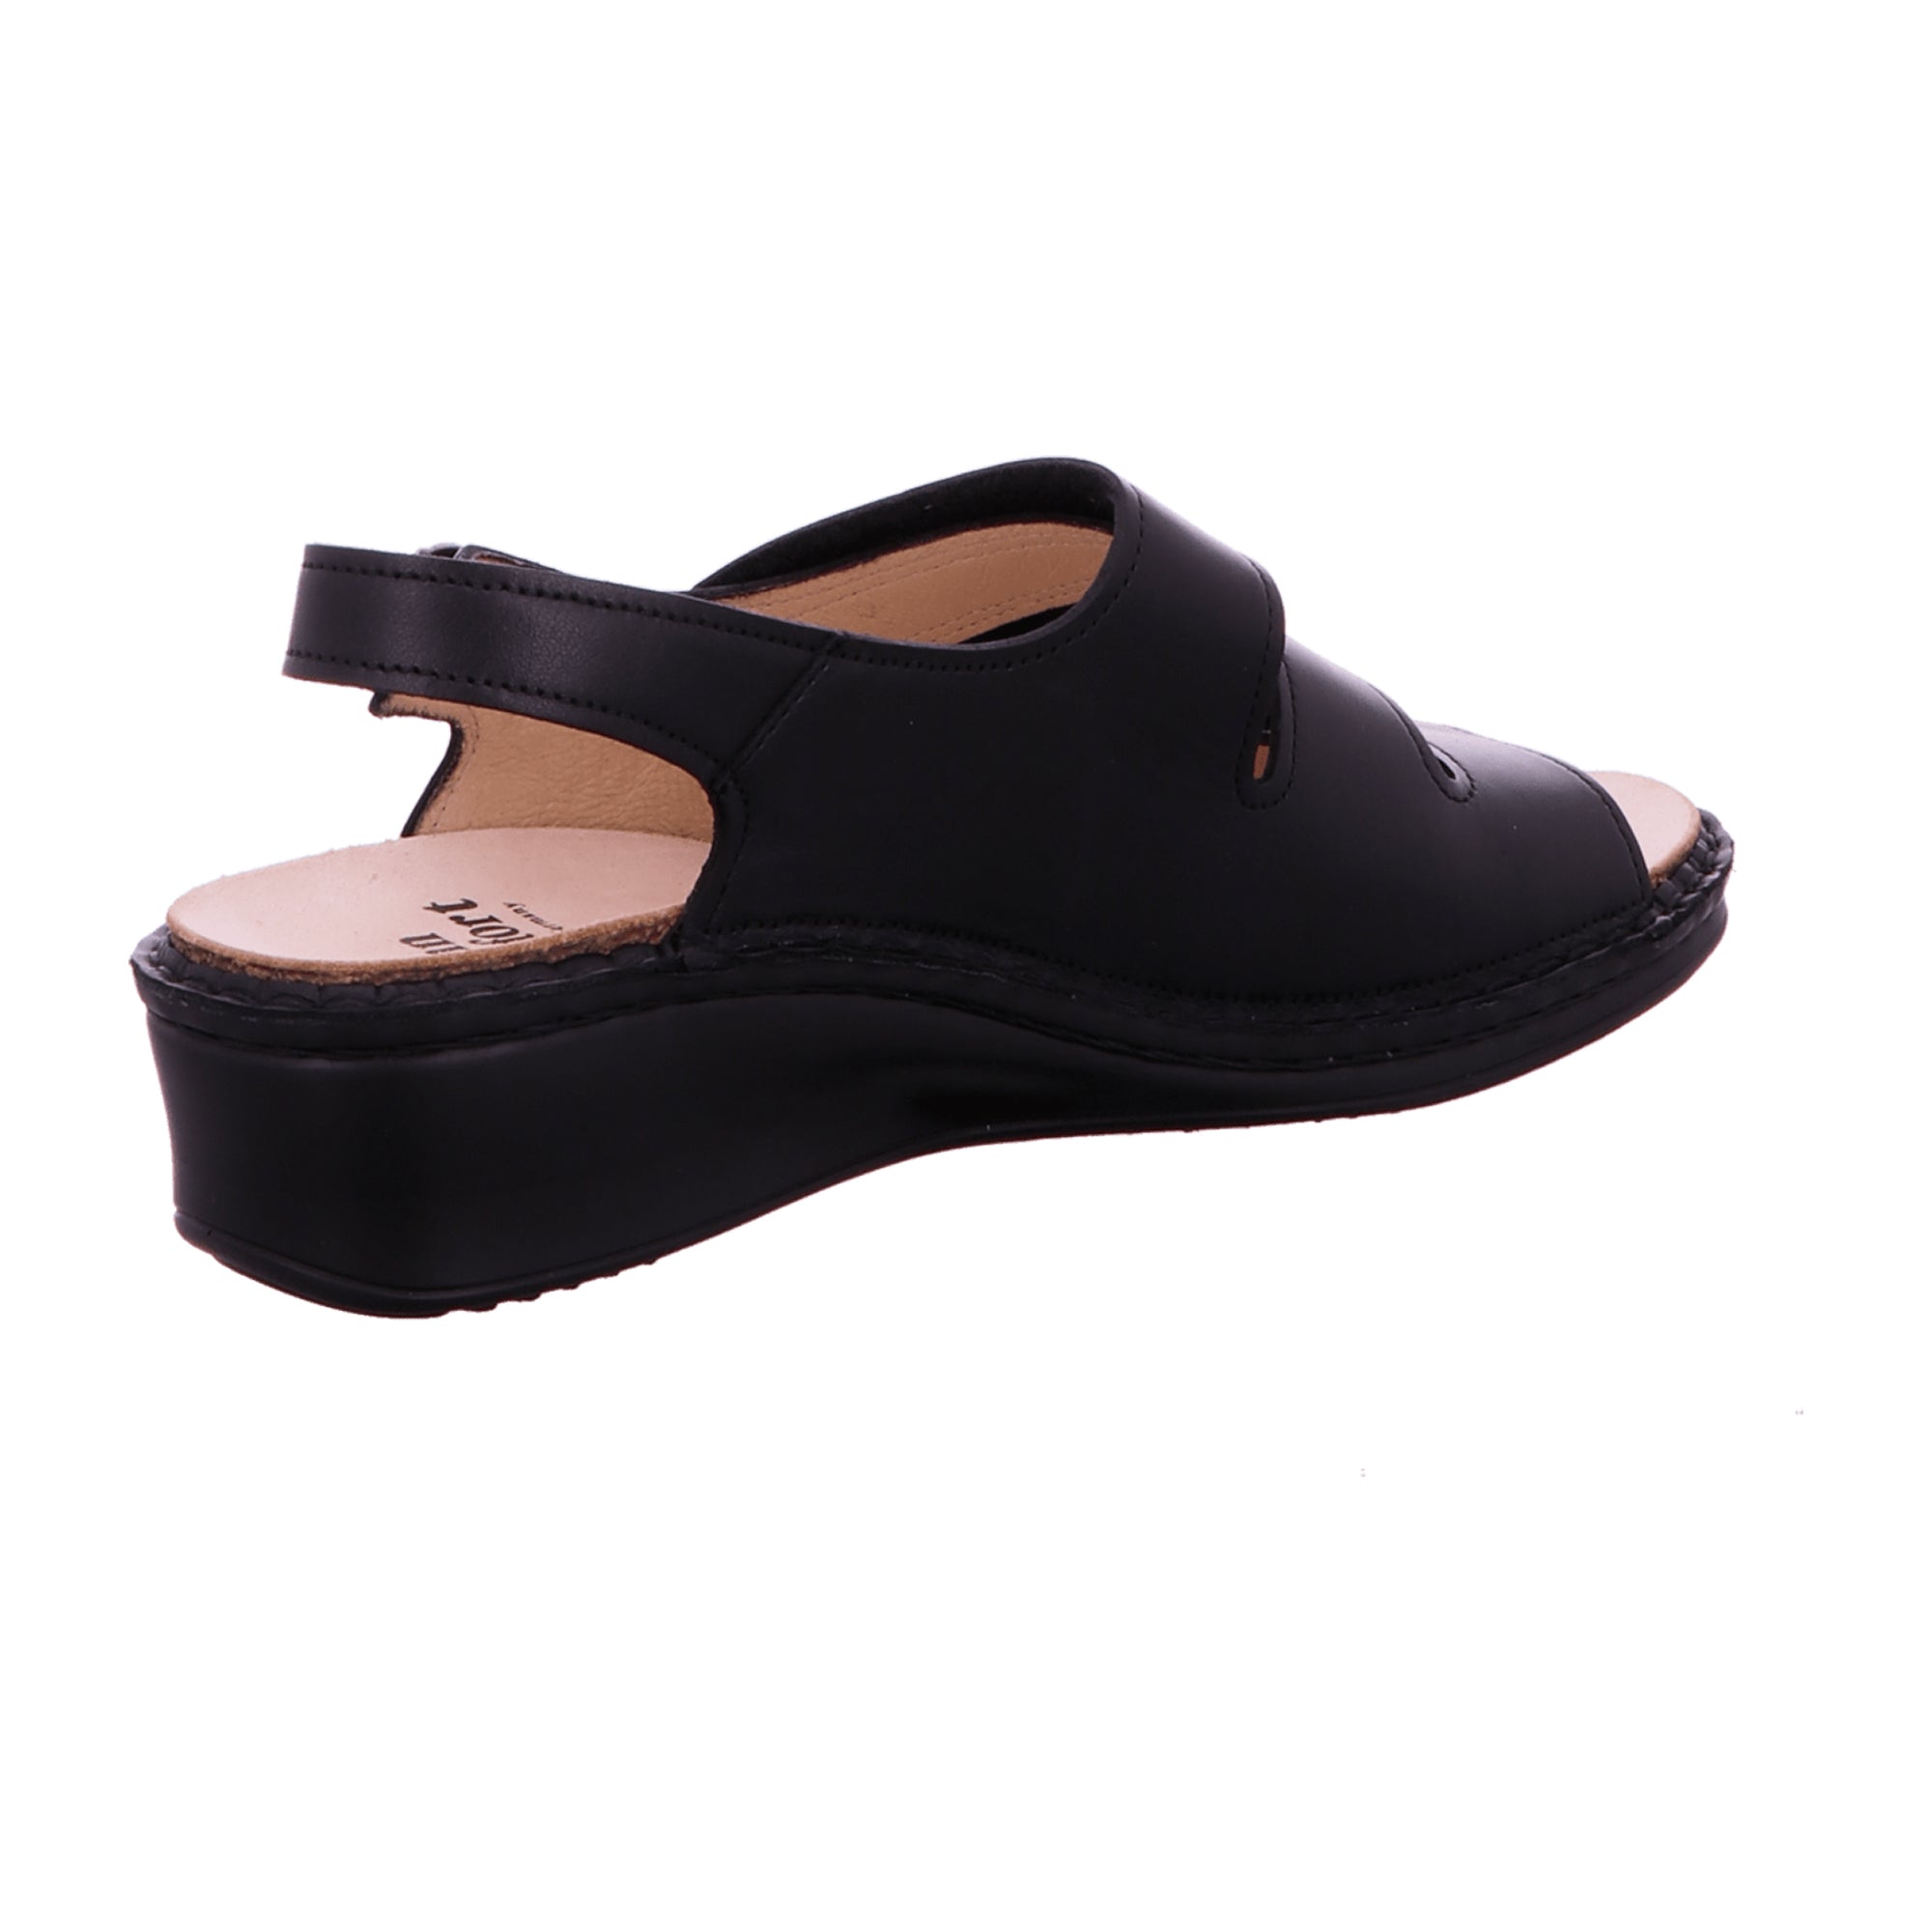 Finn Comfort Samoa Women's Black Sandals - Comfortable & Stylish Footwear